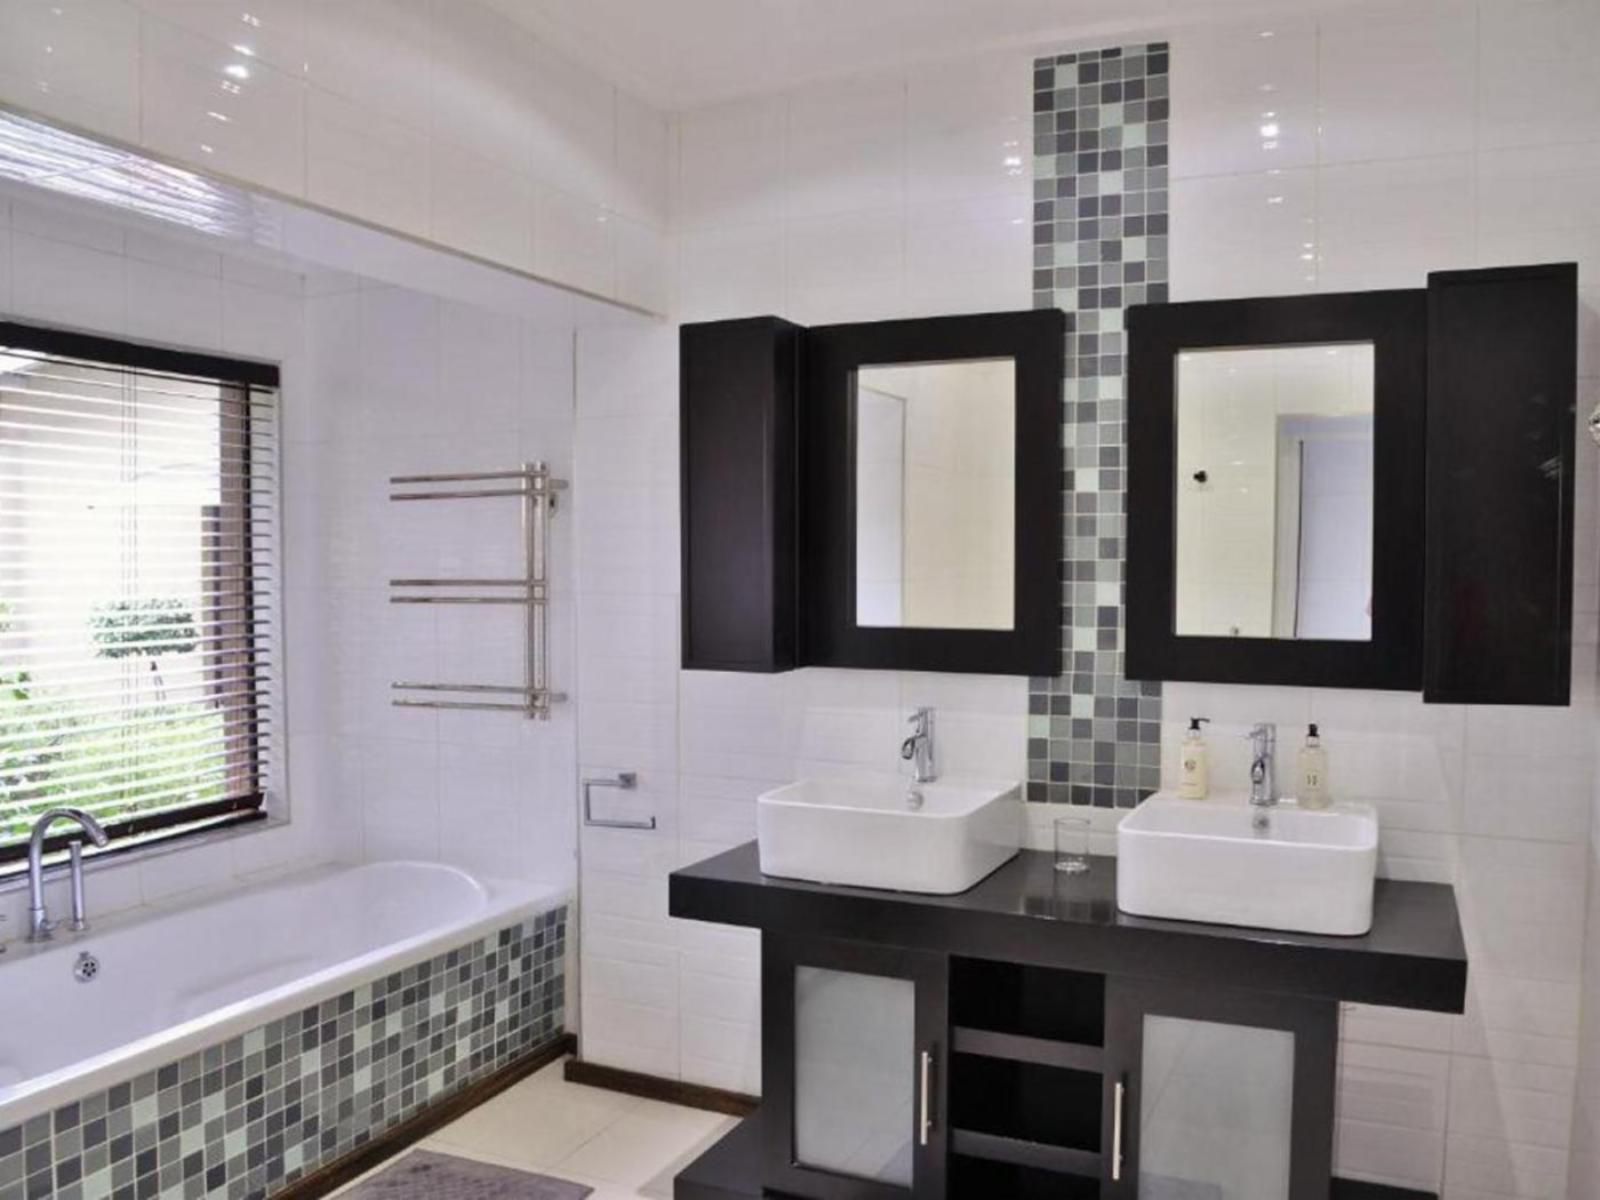 Die Kliphuis Standerton Mpumalanga South Africa Unsaturated, Bathroom